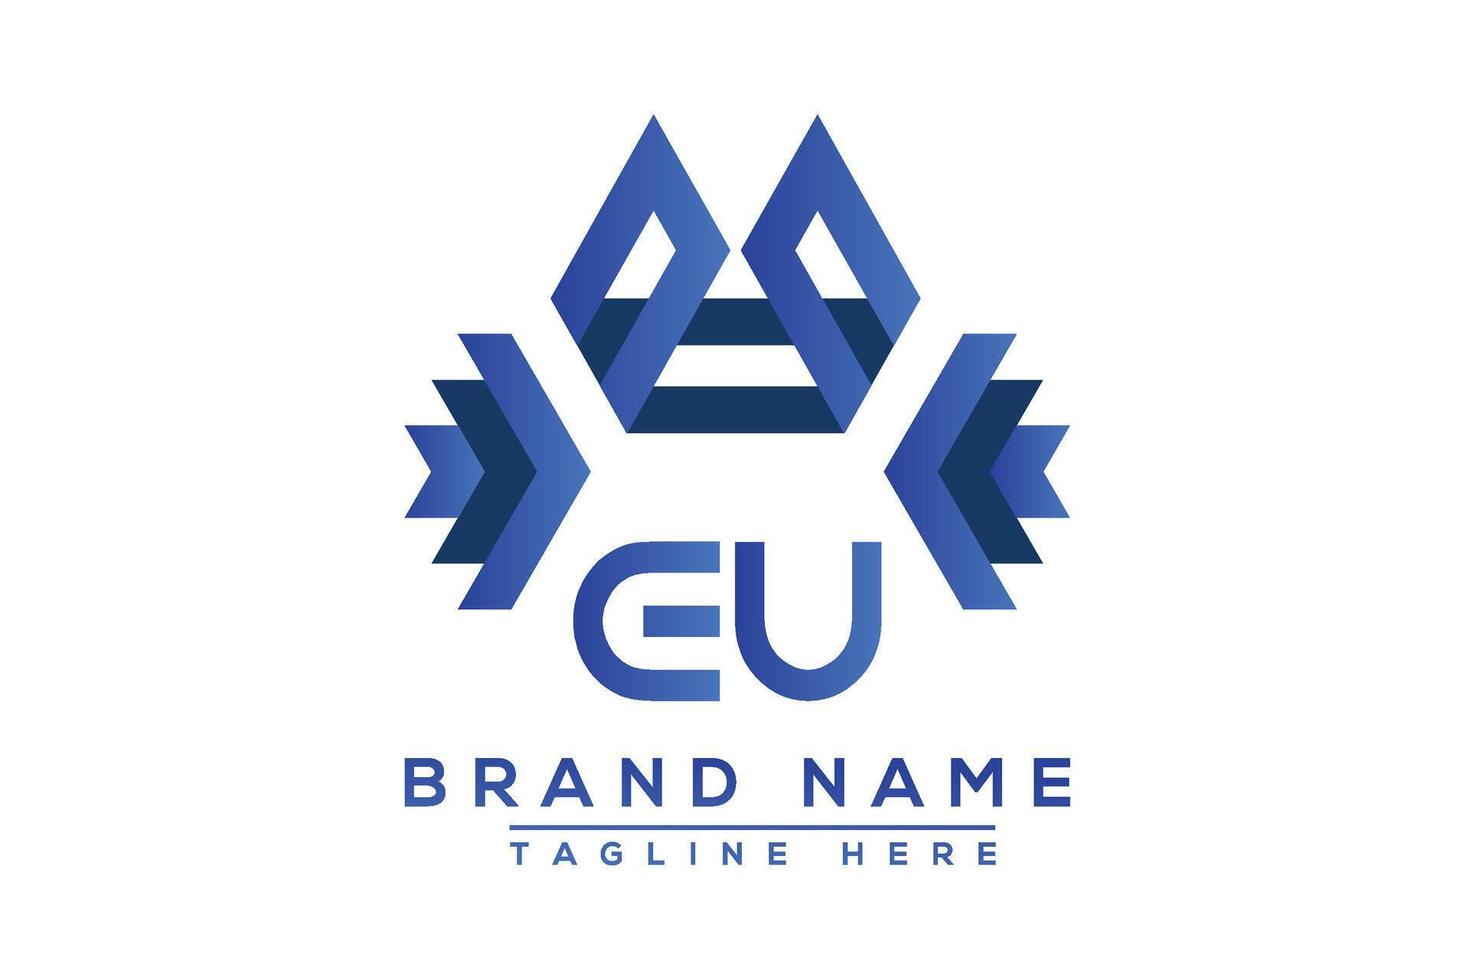 azul UE letra logo diseño. vector logo diseño para negocio.